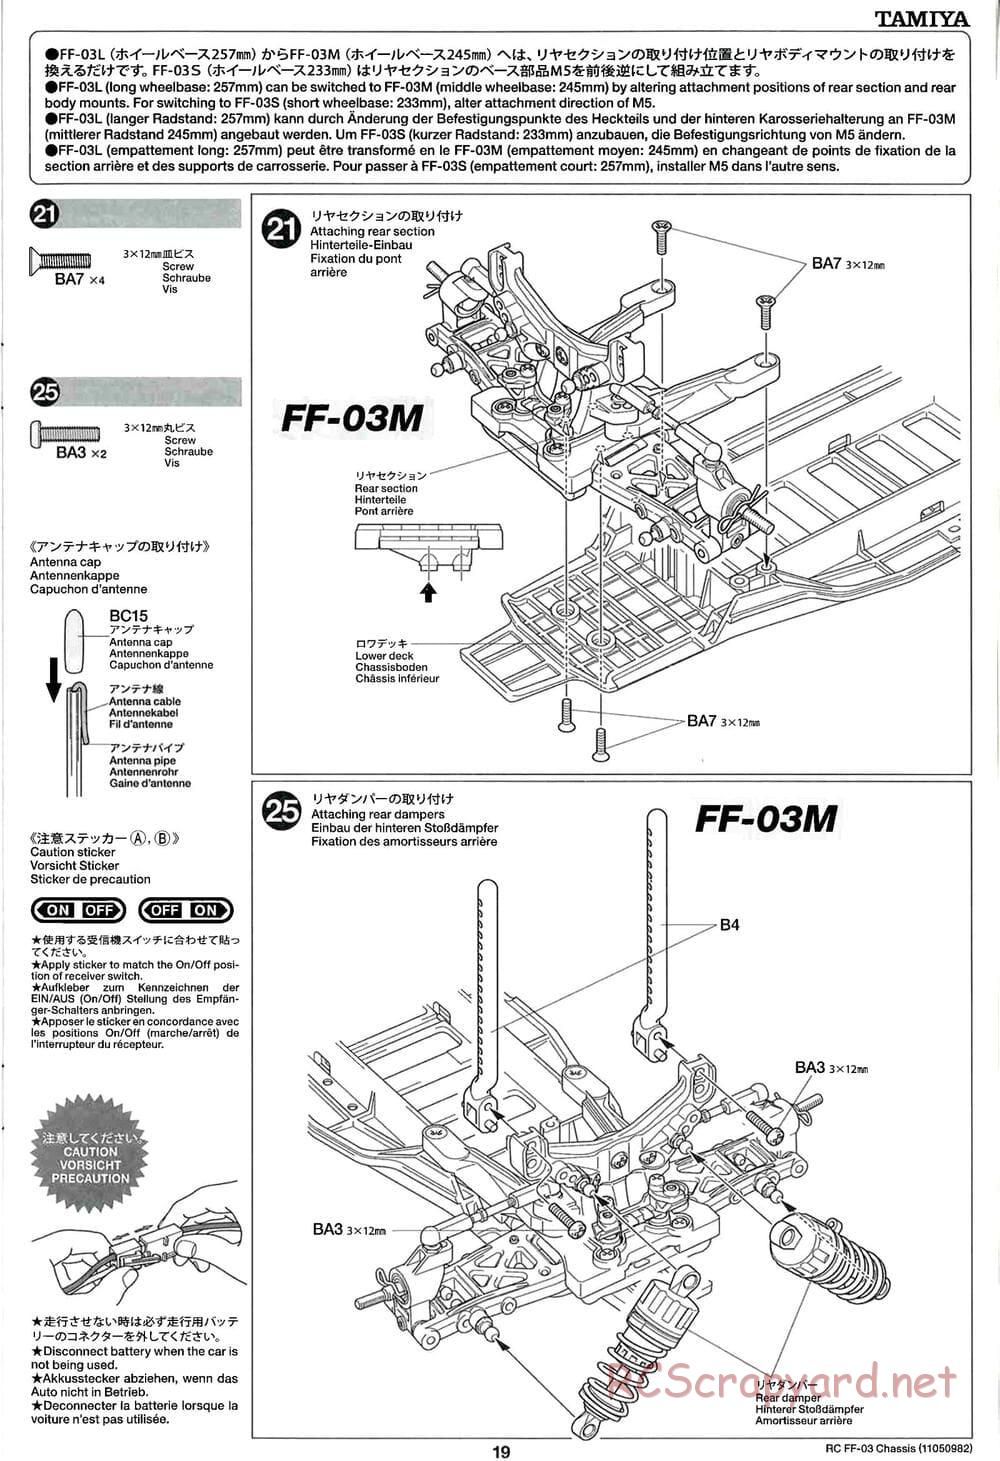 Tamiya - FF-03 Chassis - Manual - Page 19